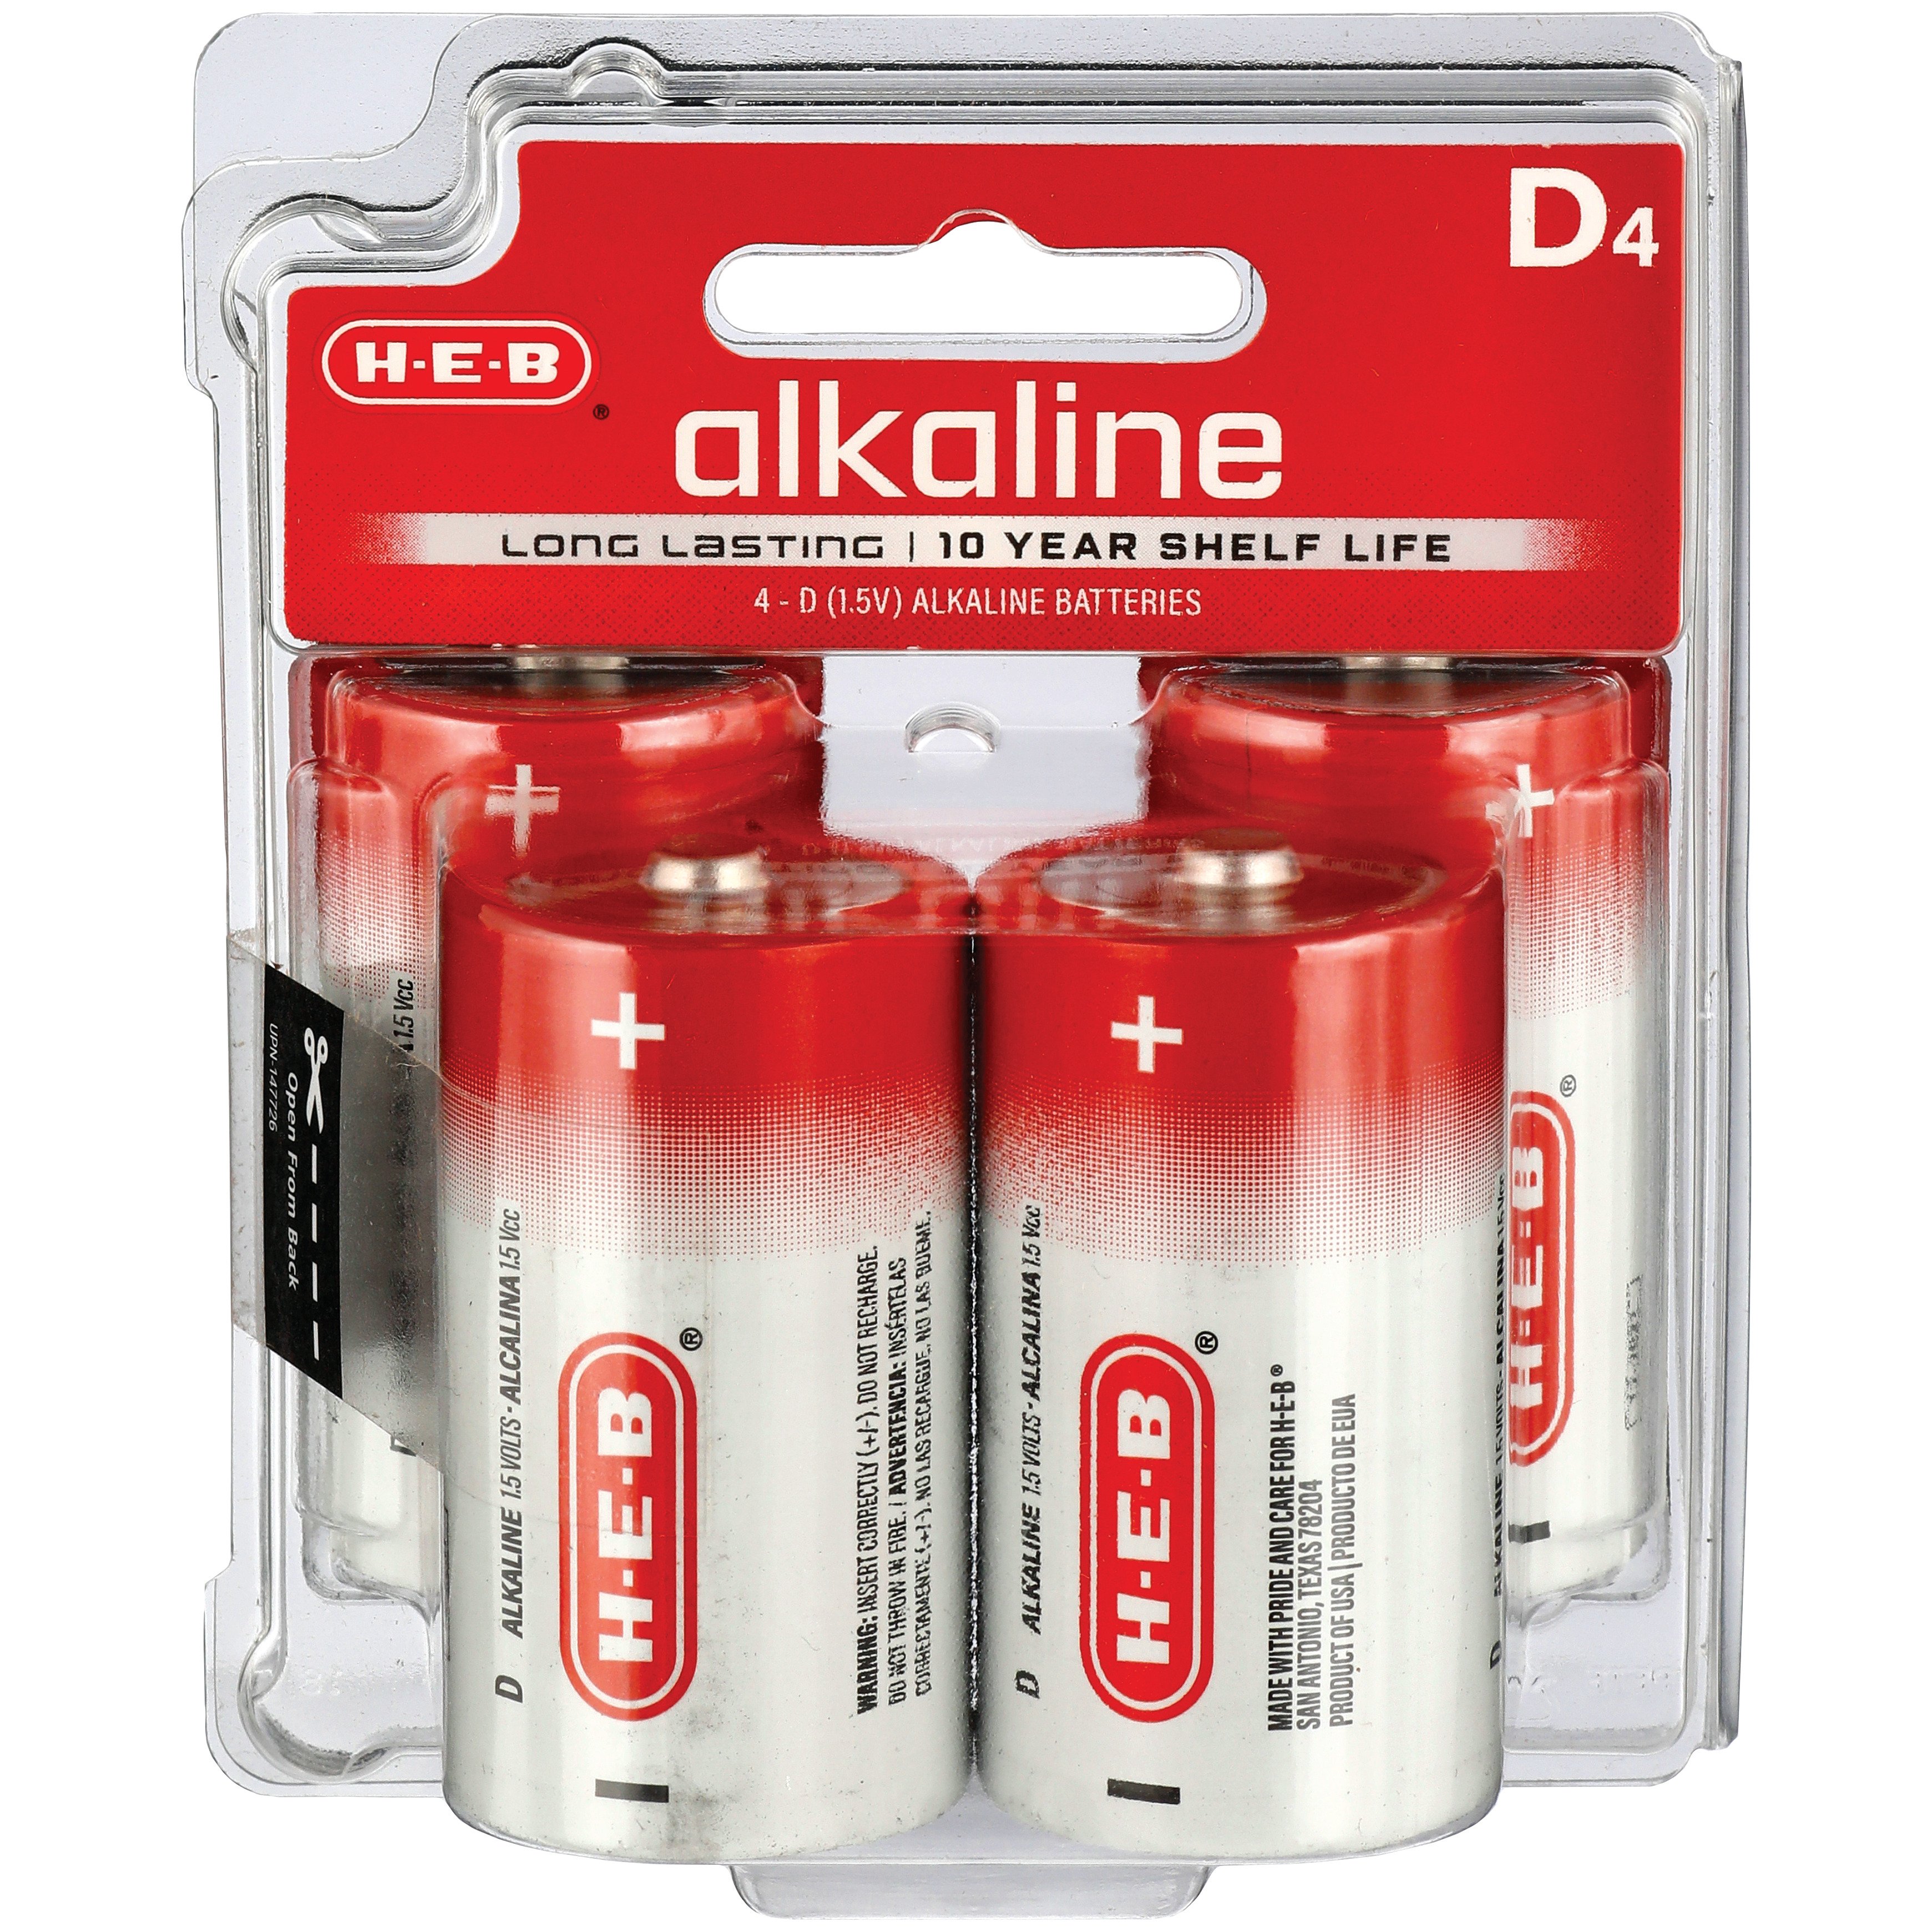 H-E-B Alkaline D Batteries - Shop Batteries at H-E-B